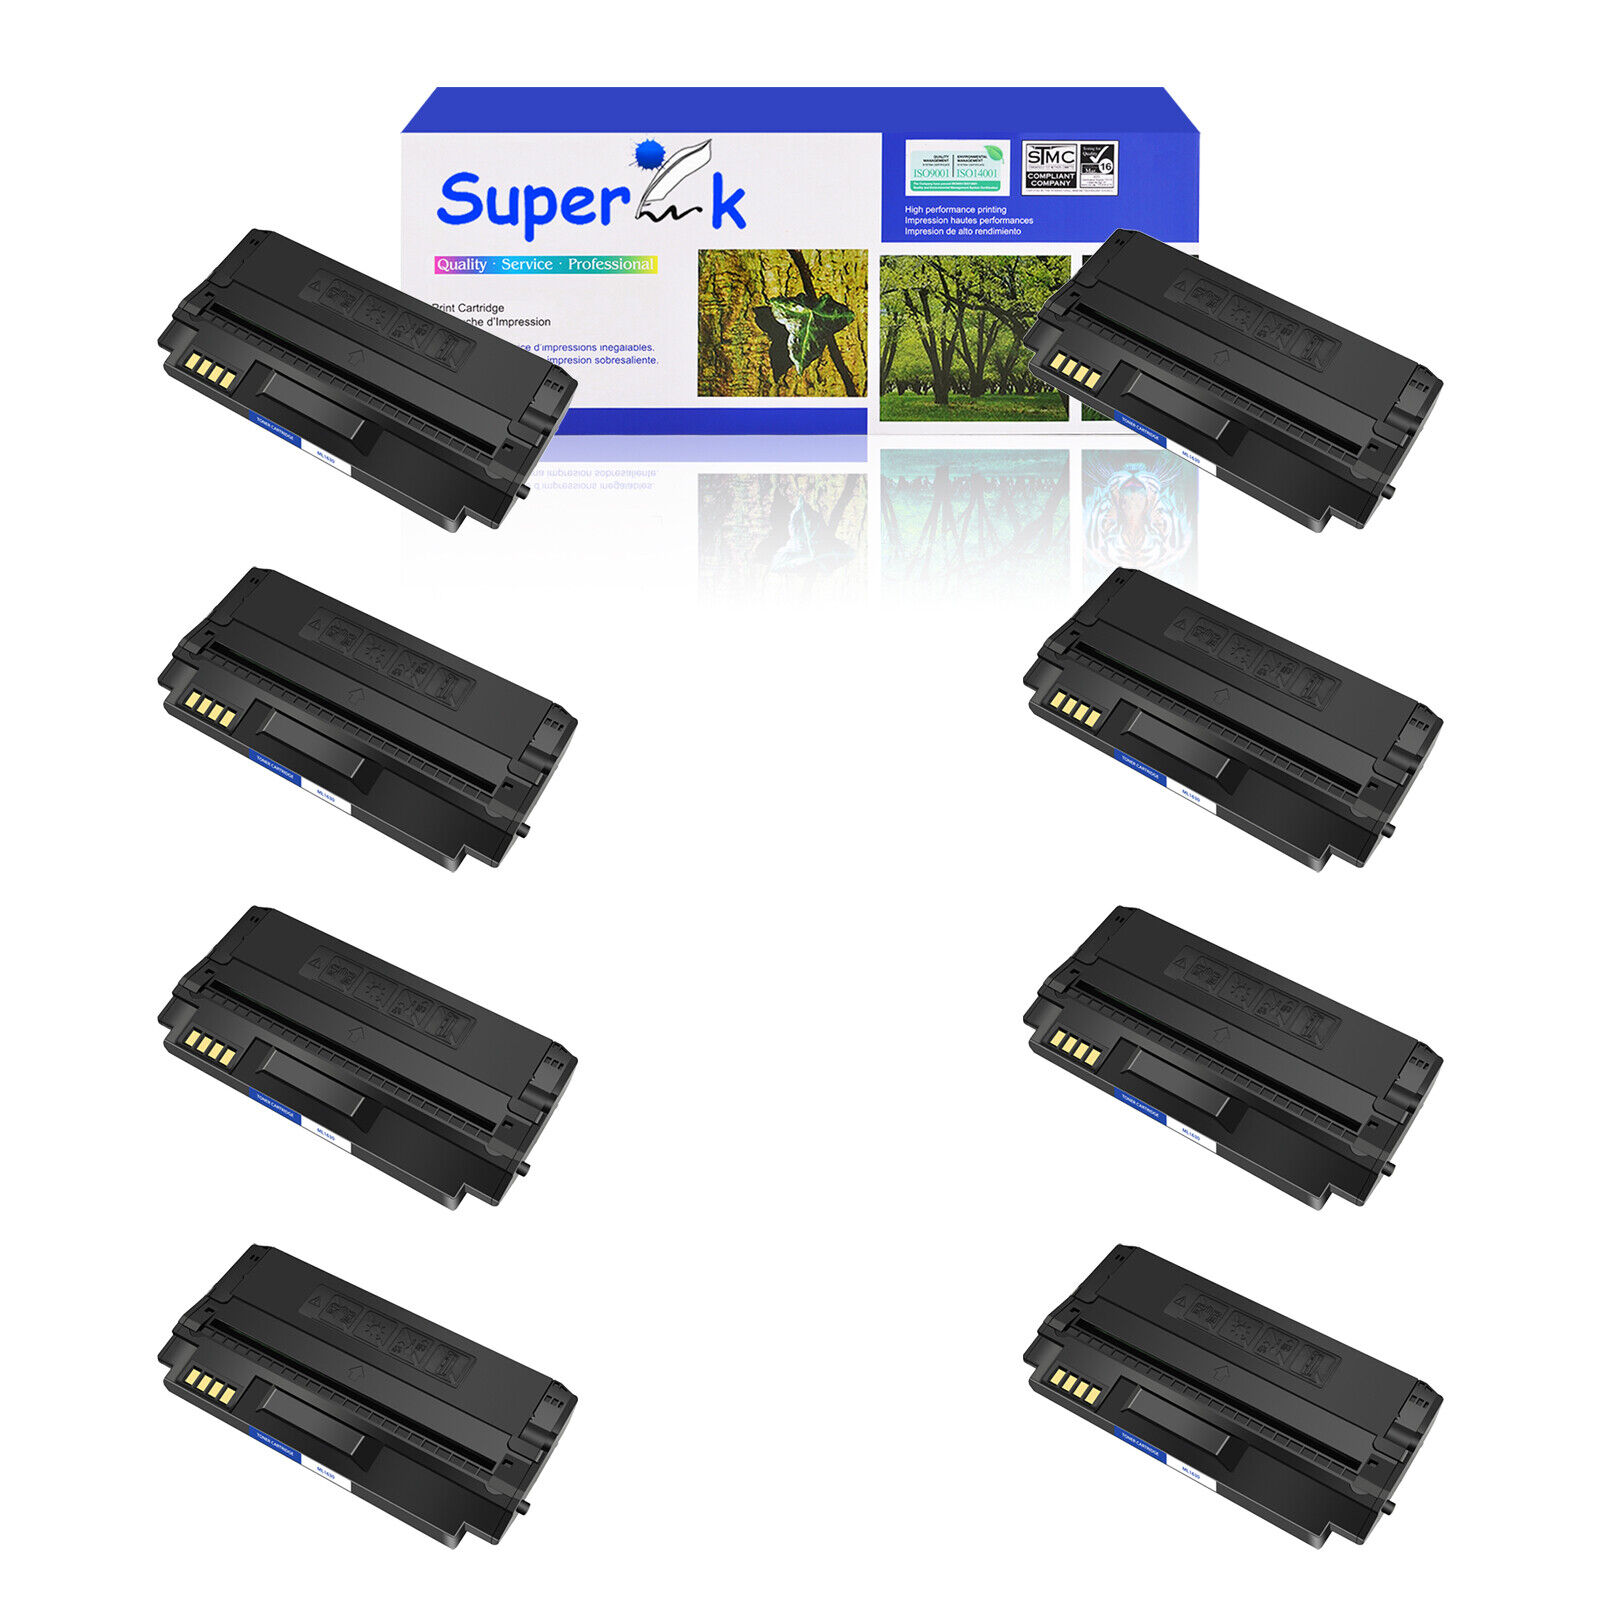 8PK ML1630 Black Toner Cartridge For Samsung SCX-4500W ML-1630 ML-1630W Printer